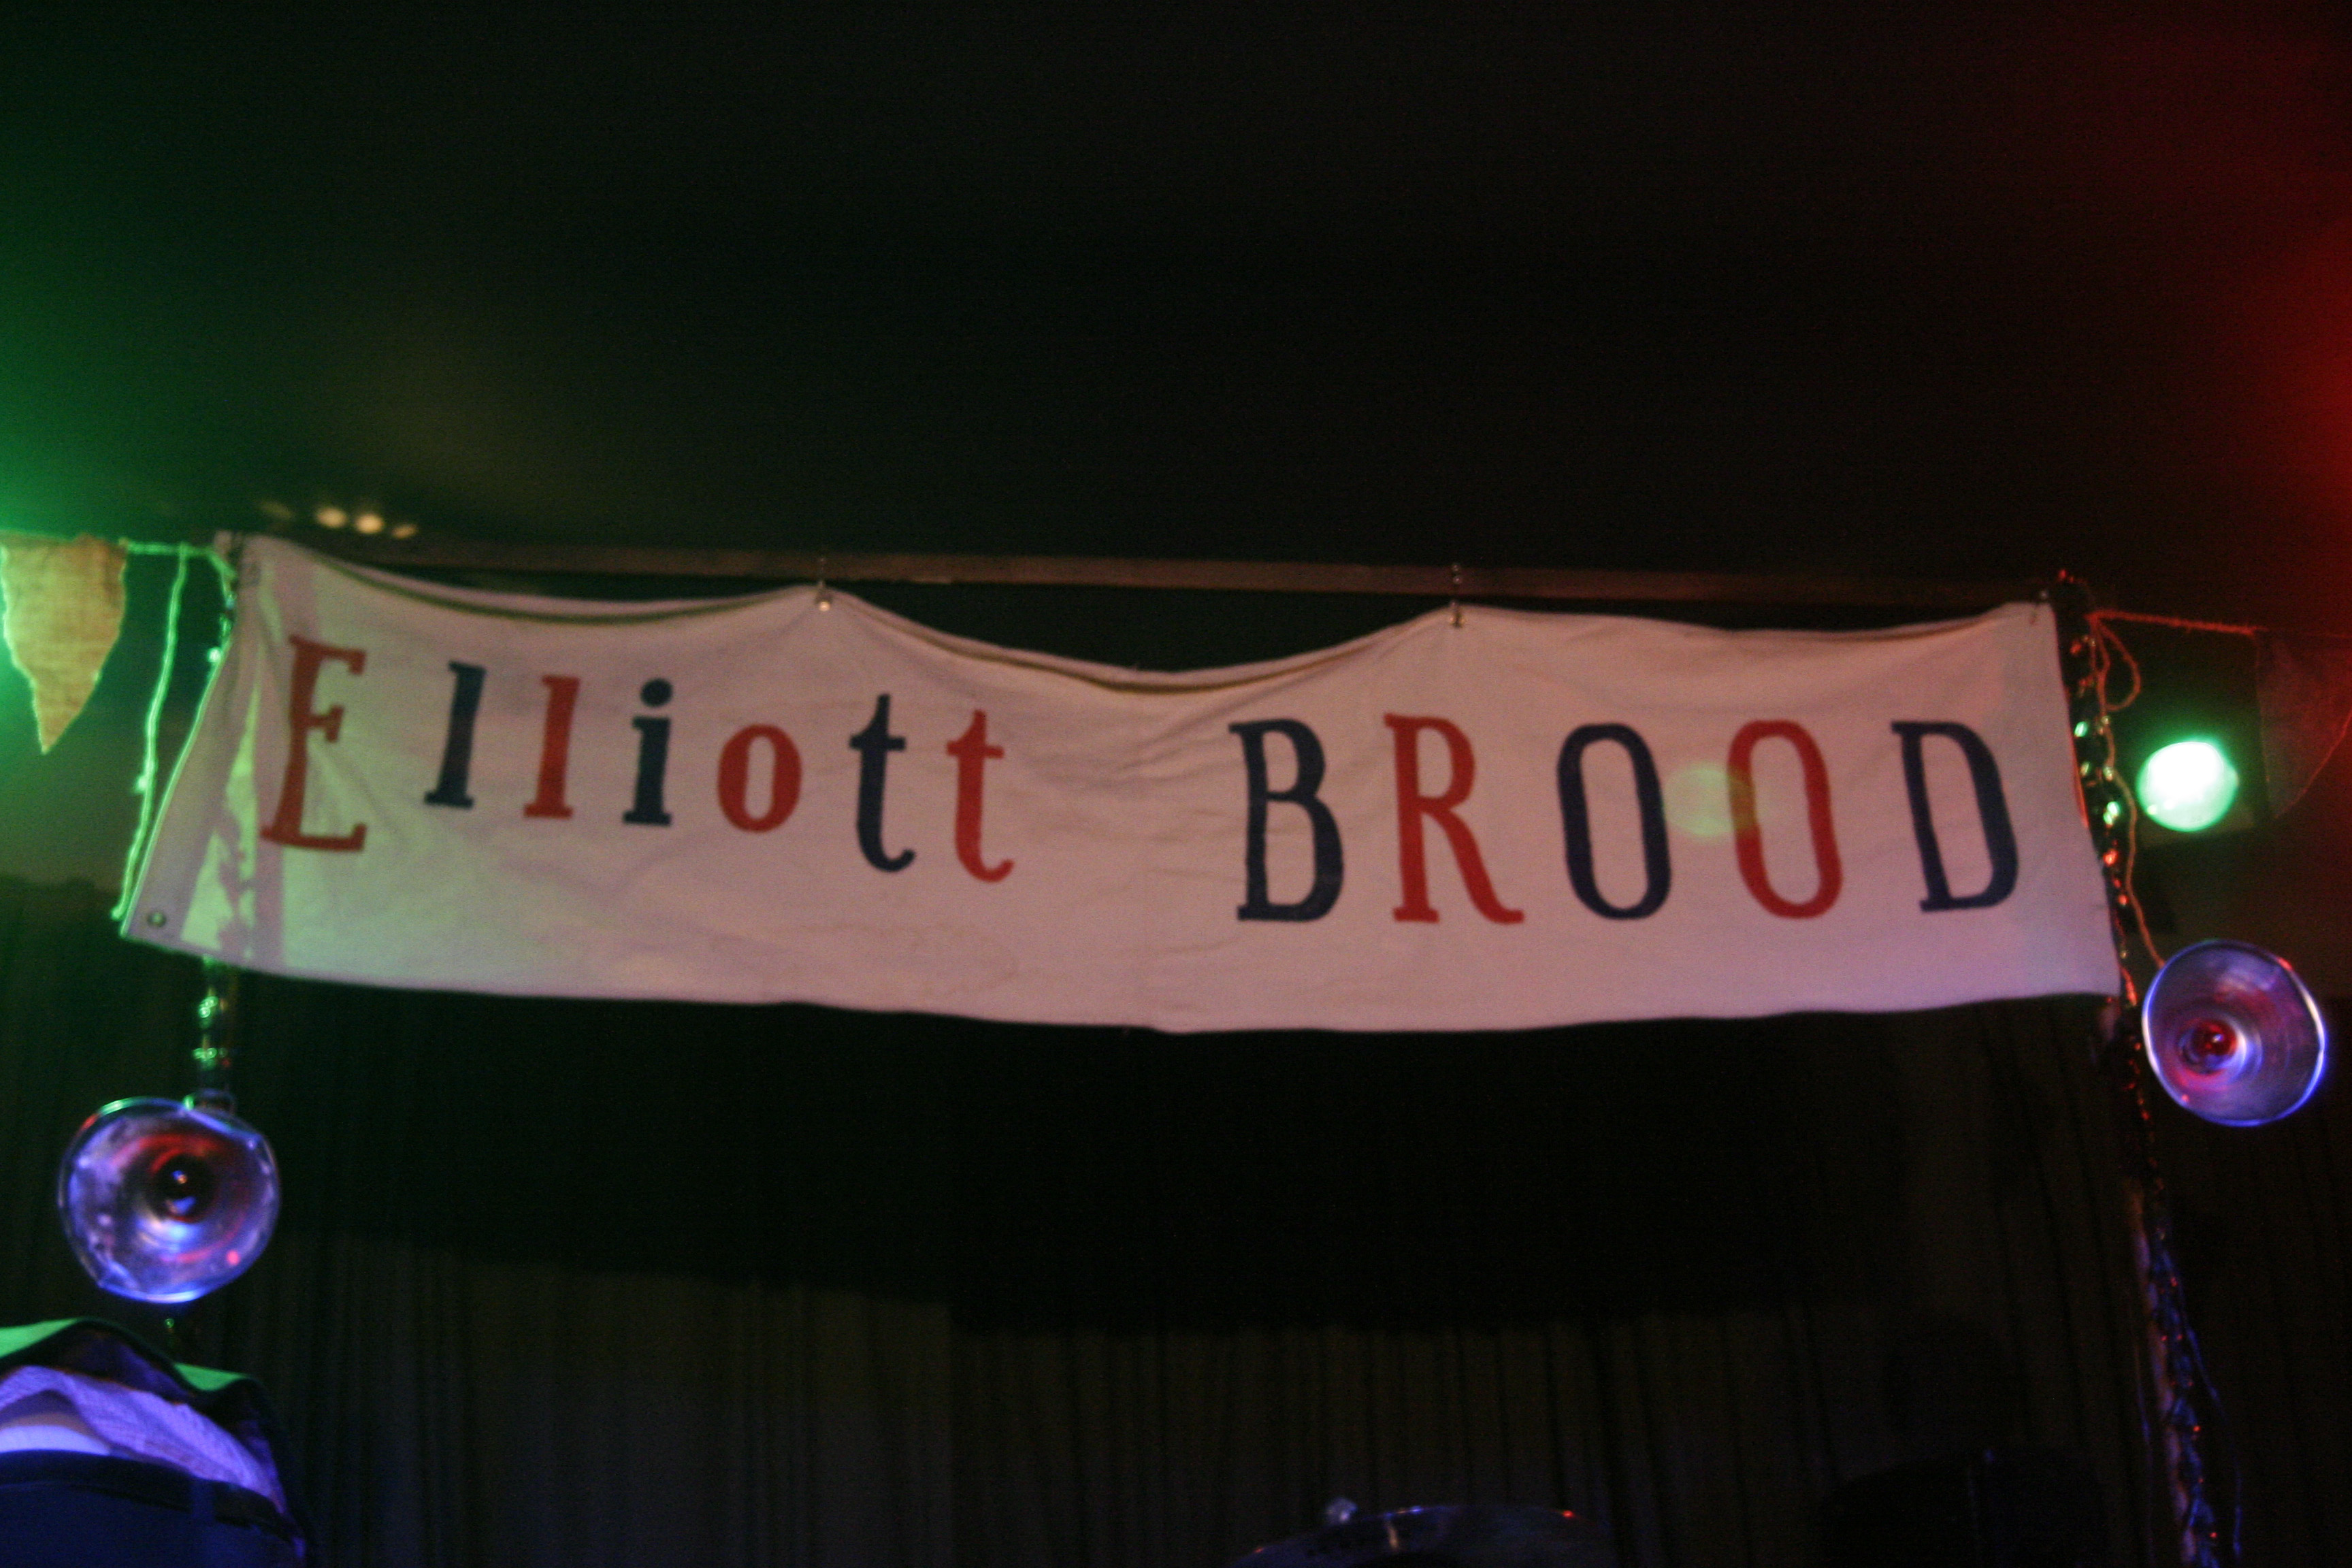 The Elliott Brood Banner at Mavericks